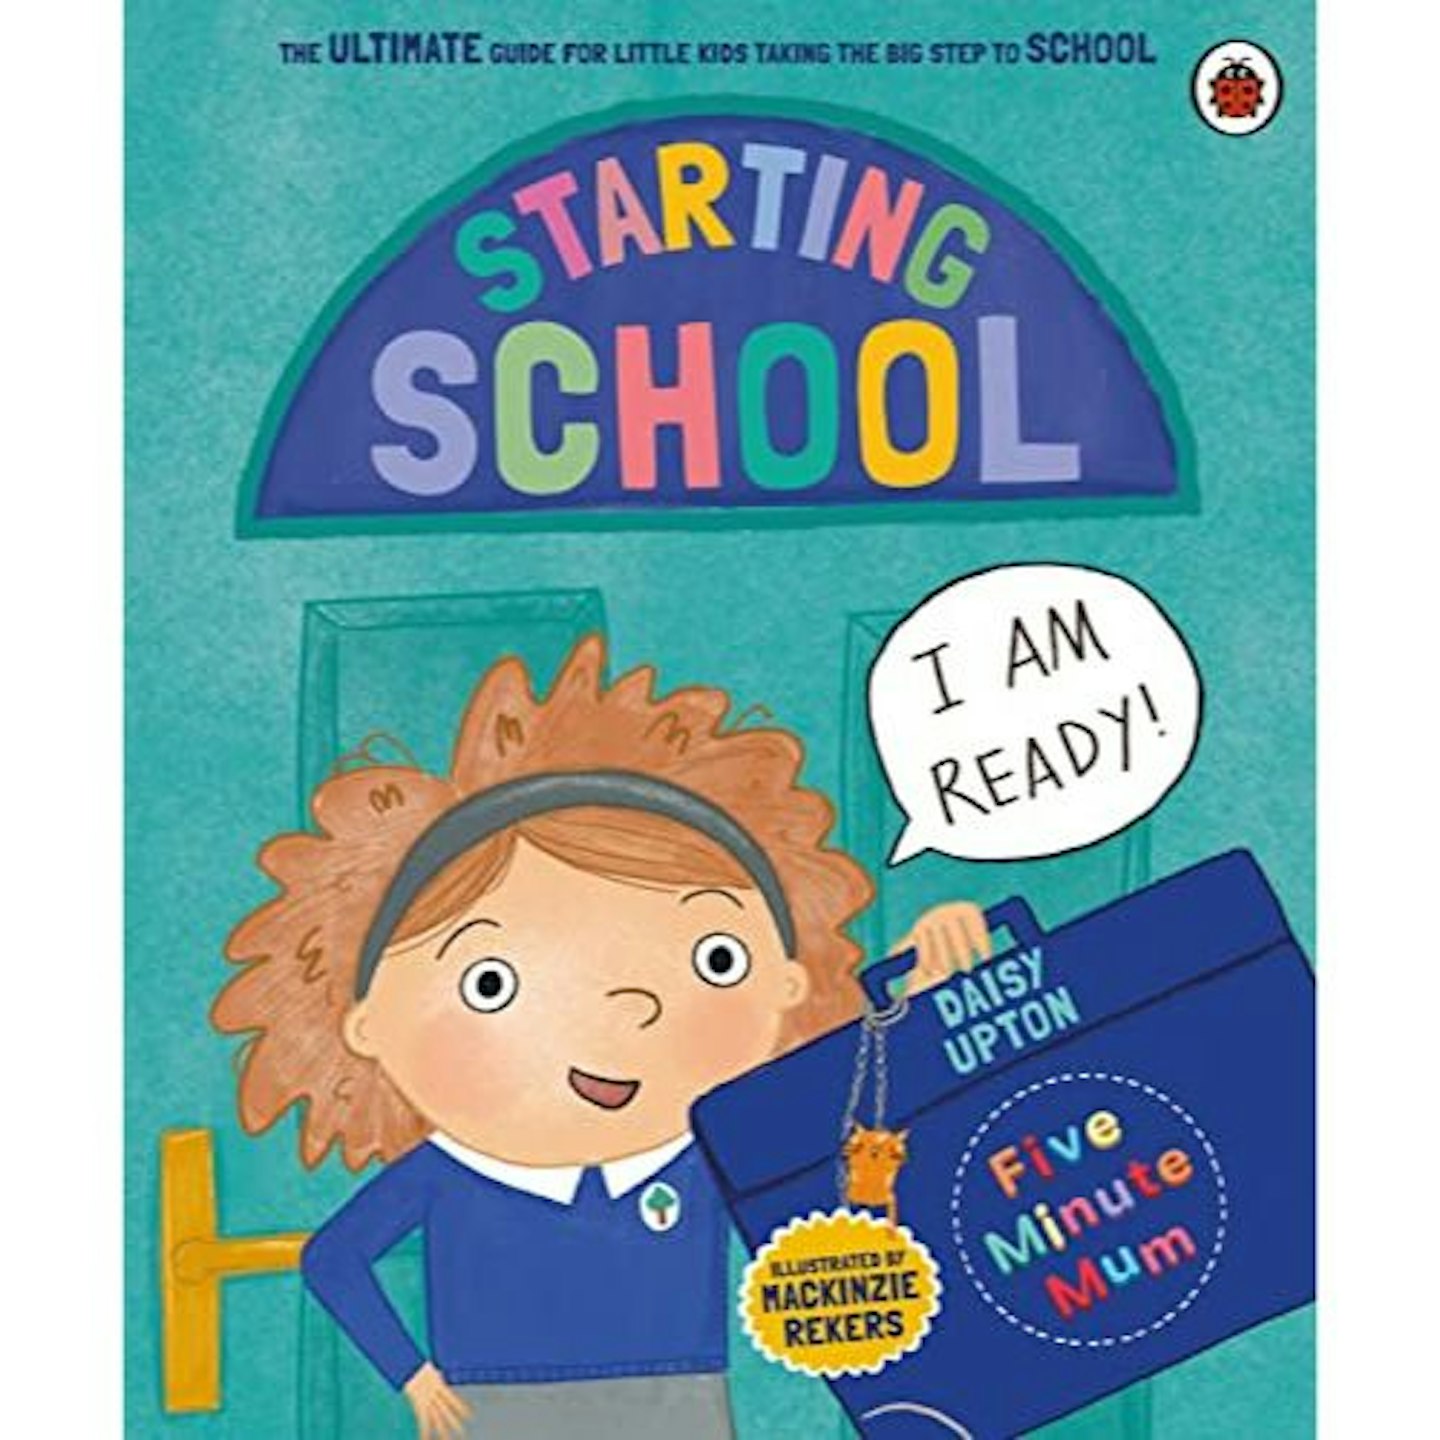 Best best back to school essentials book five minute mum starting school